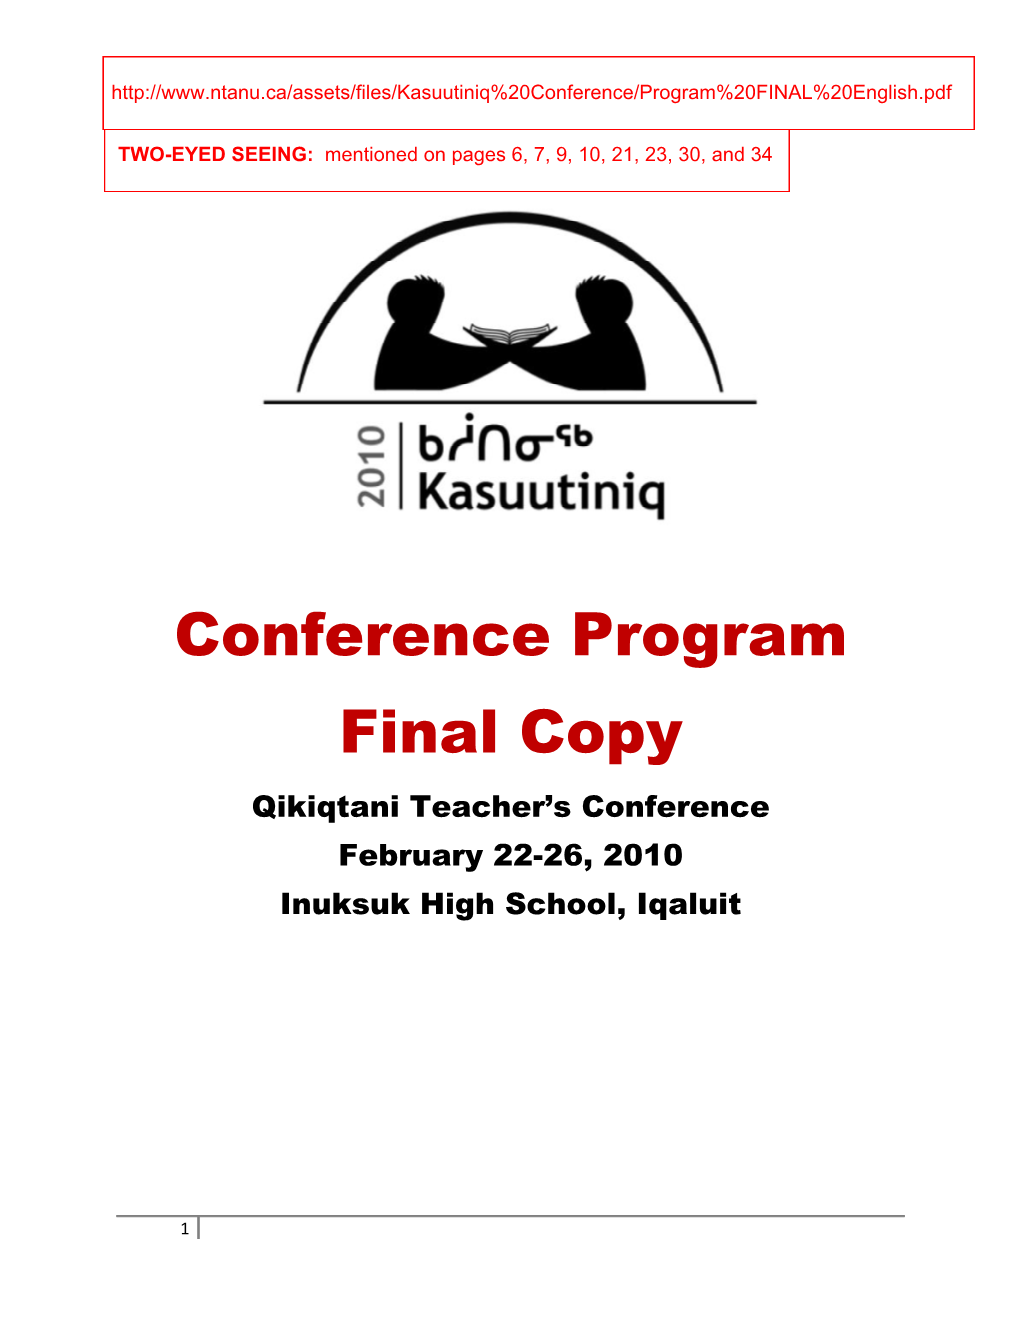 Conference Program Final Copy Qikiqtani Teacher’S Conference February 22-26, 2010 Inuksuk High School, Iqaluit